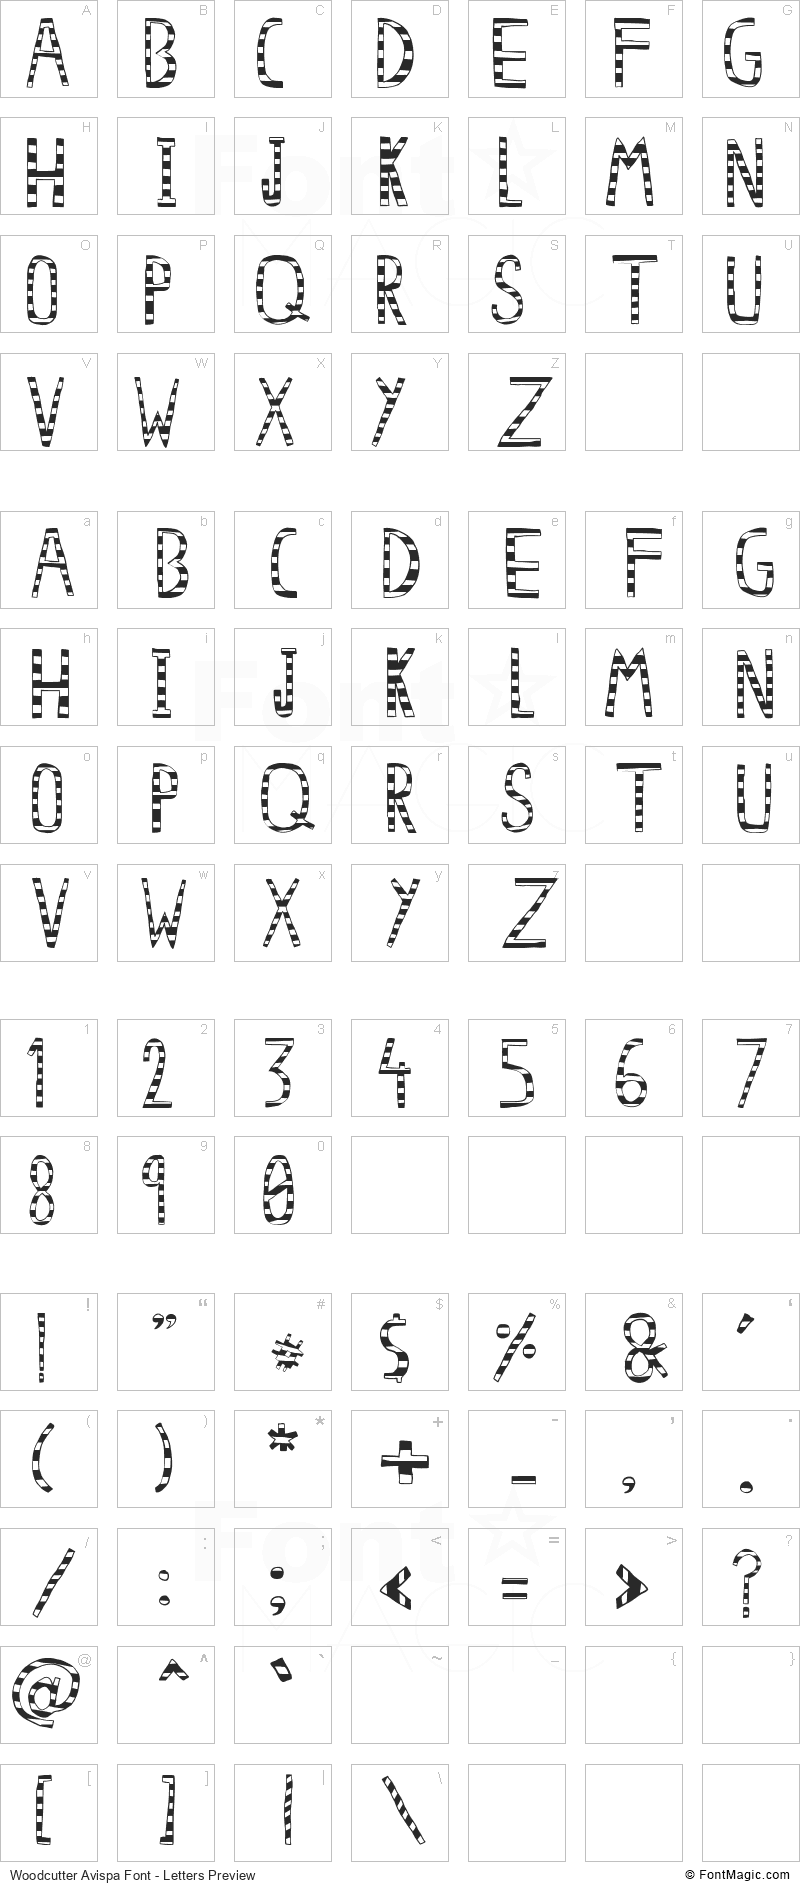 Woodcutter Avispa Font - All Latters Preview Chart